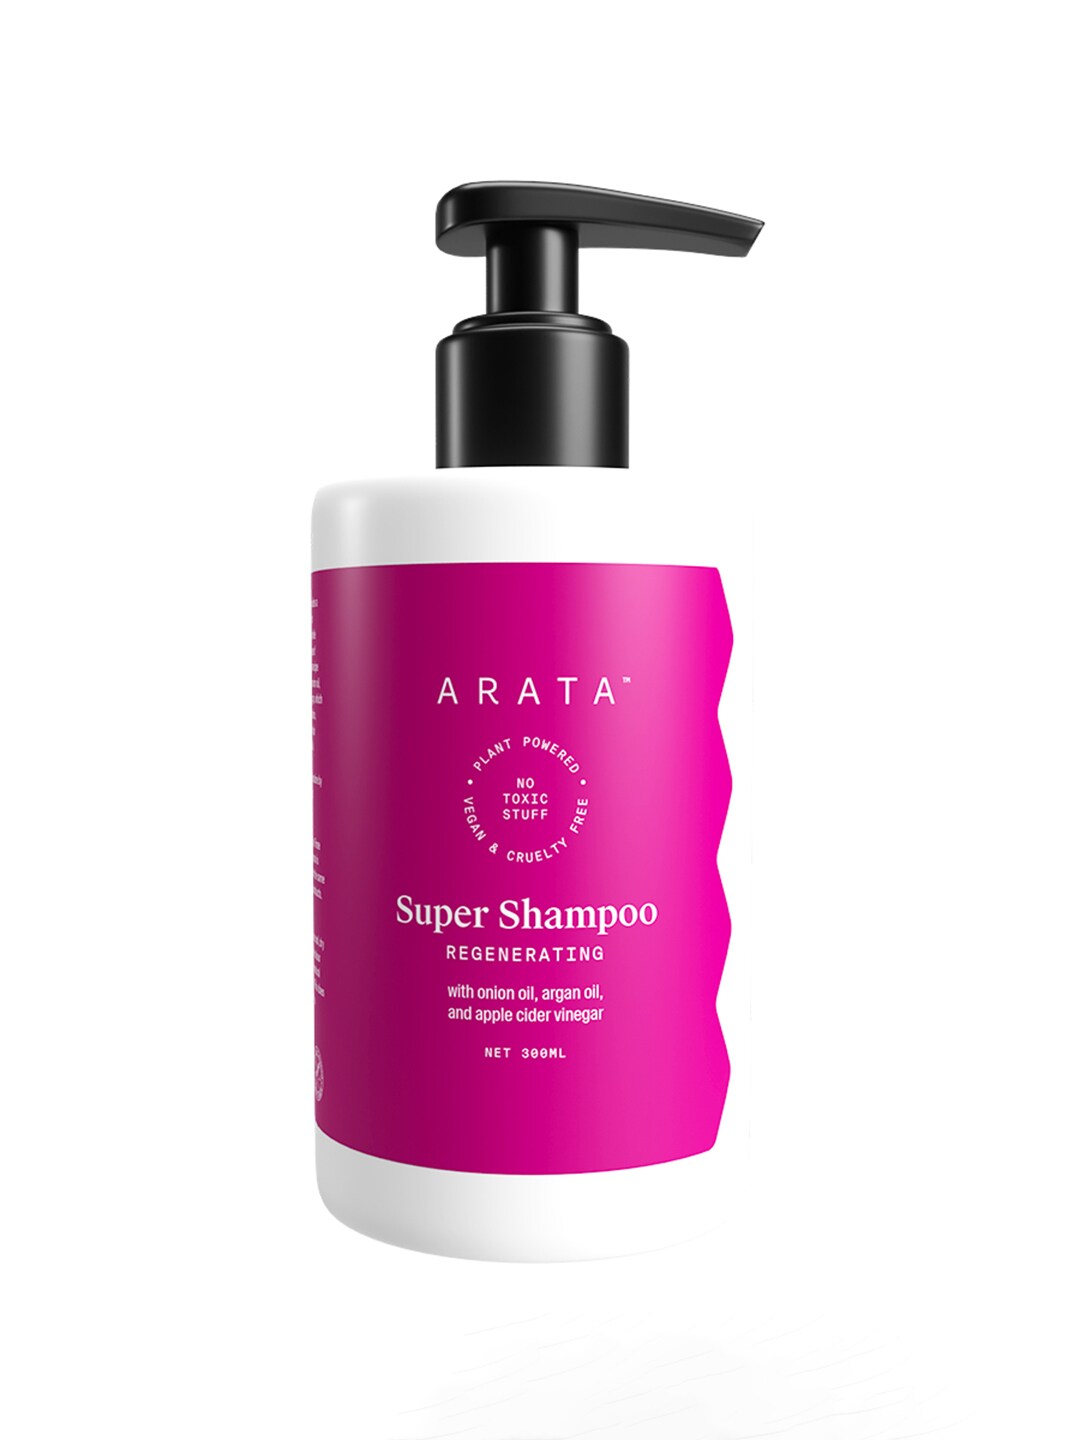 ARATA Plant-Powered Super Shampoo with Onion Oil, Apple Cider Vinegar & Argan Oil - 300 ml Price in India